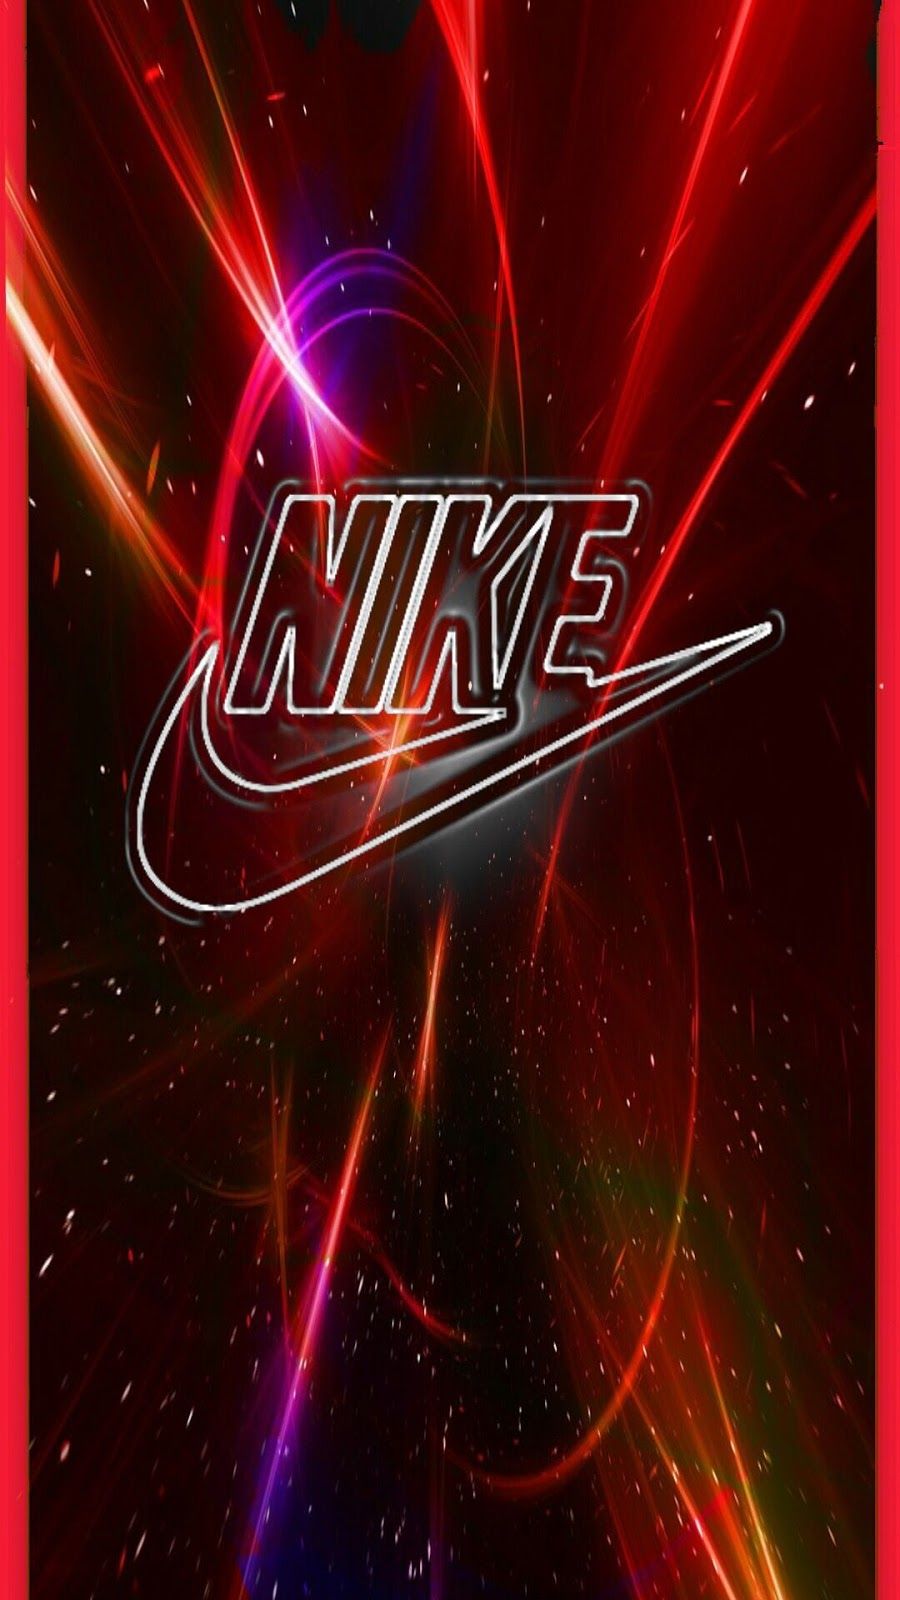 Nike Logo HD Wallpaper For iPhone X, iPhone XR, iPhone Etc. Nike wallpaper, Nike logo wallpaper, Nike wallpaper iphone